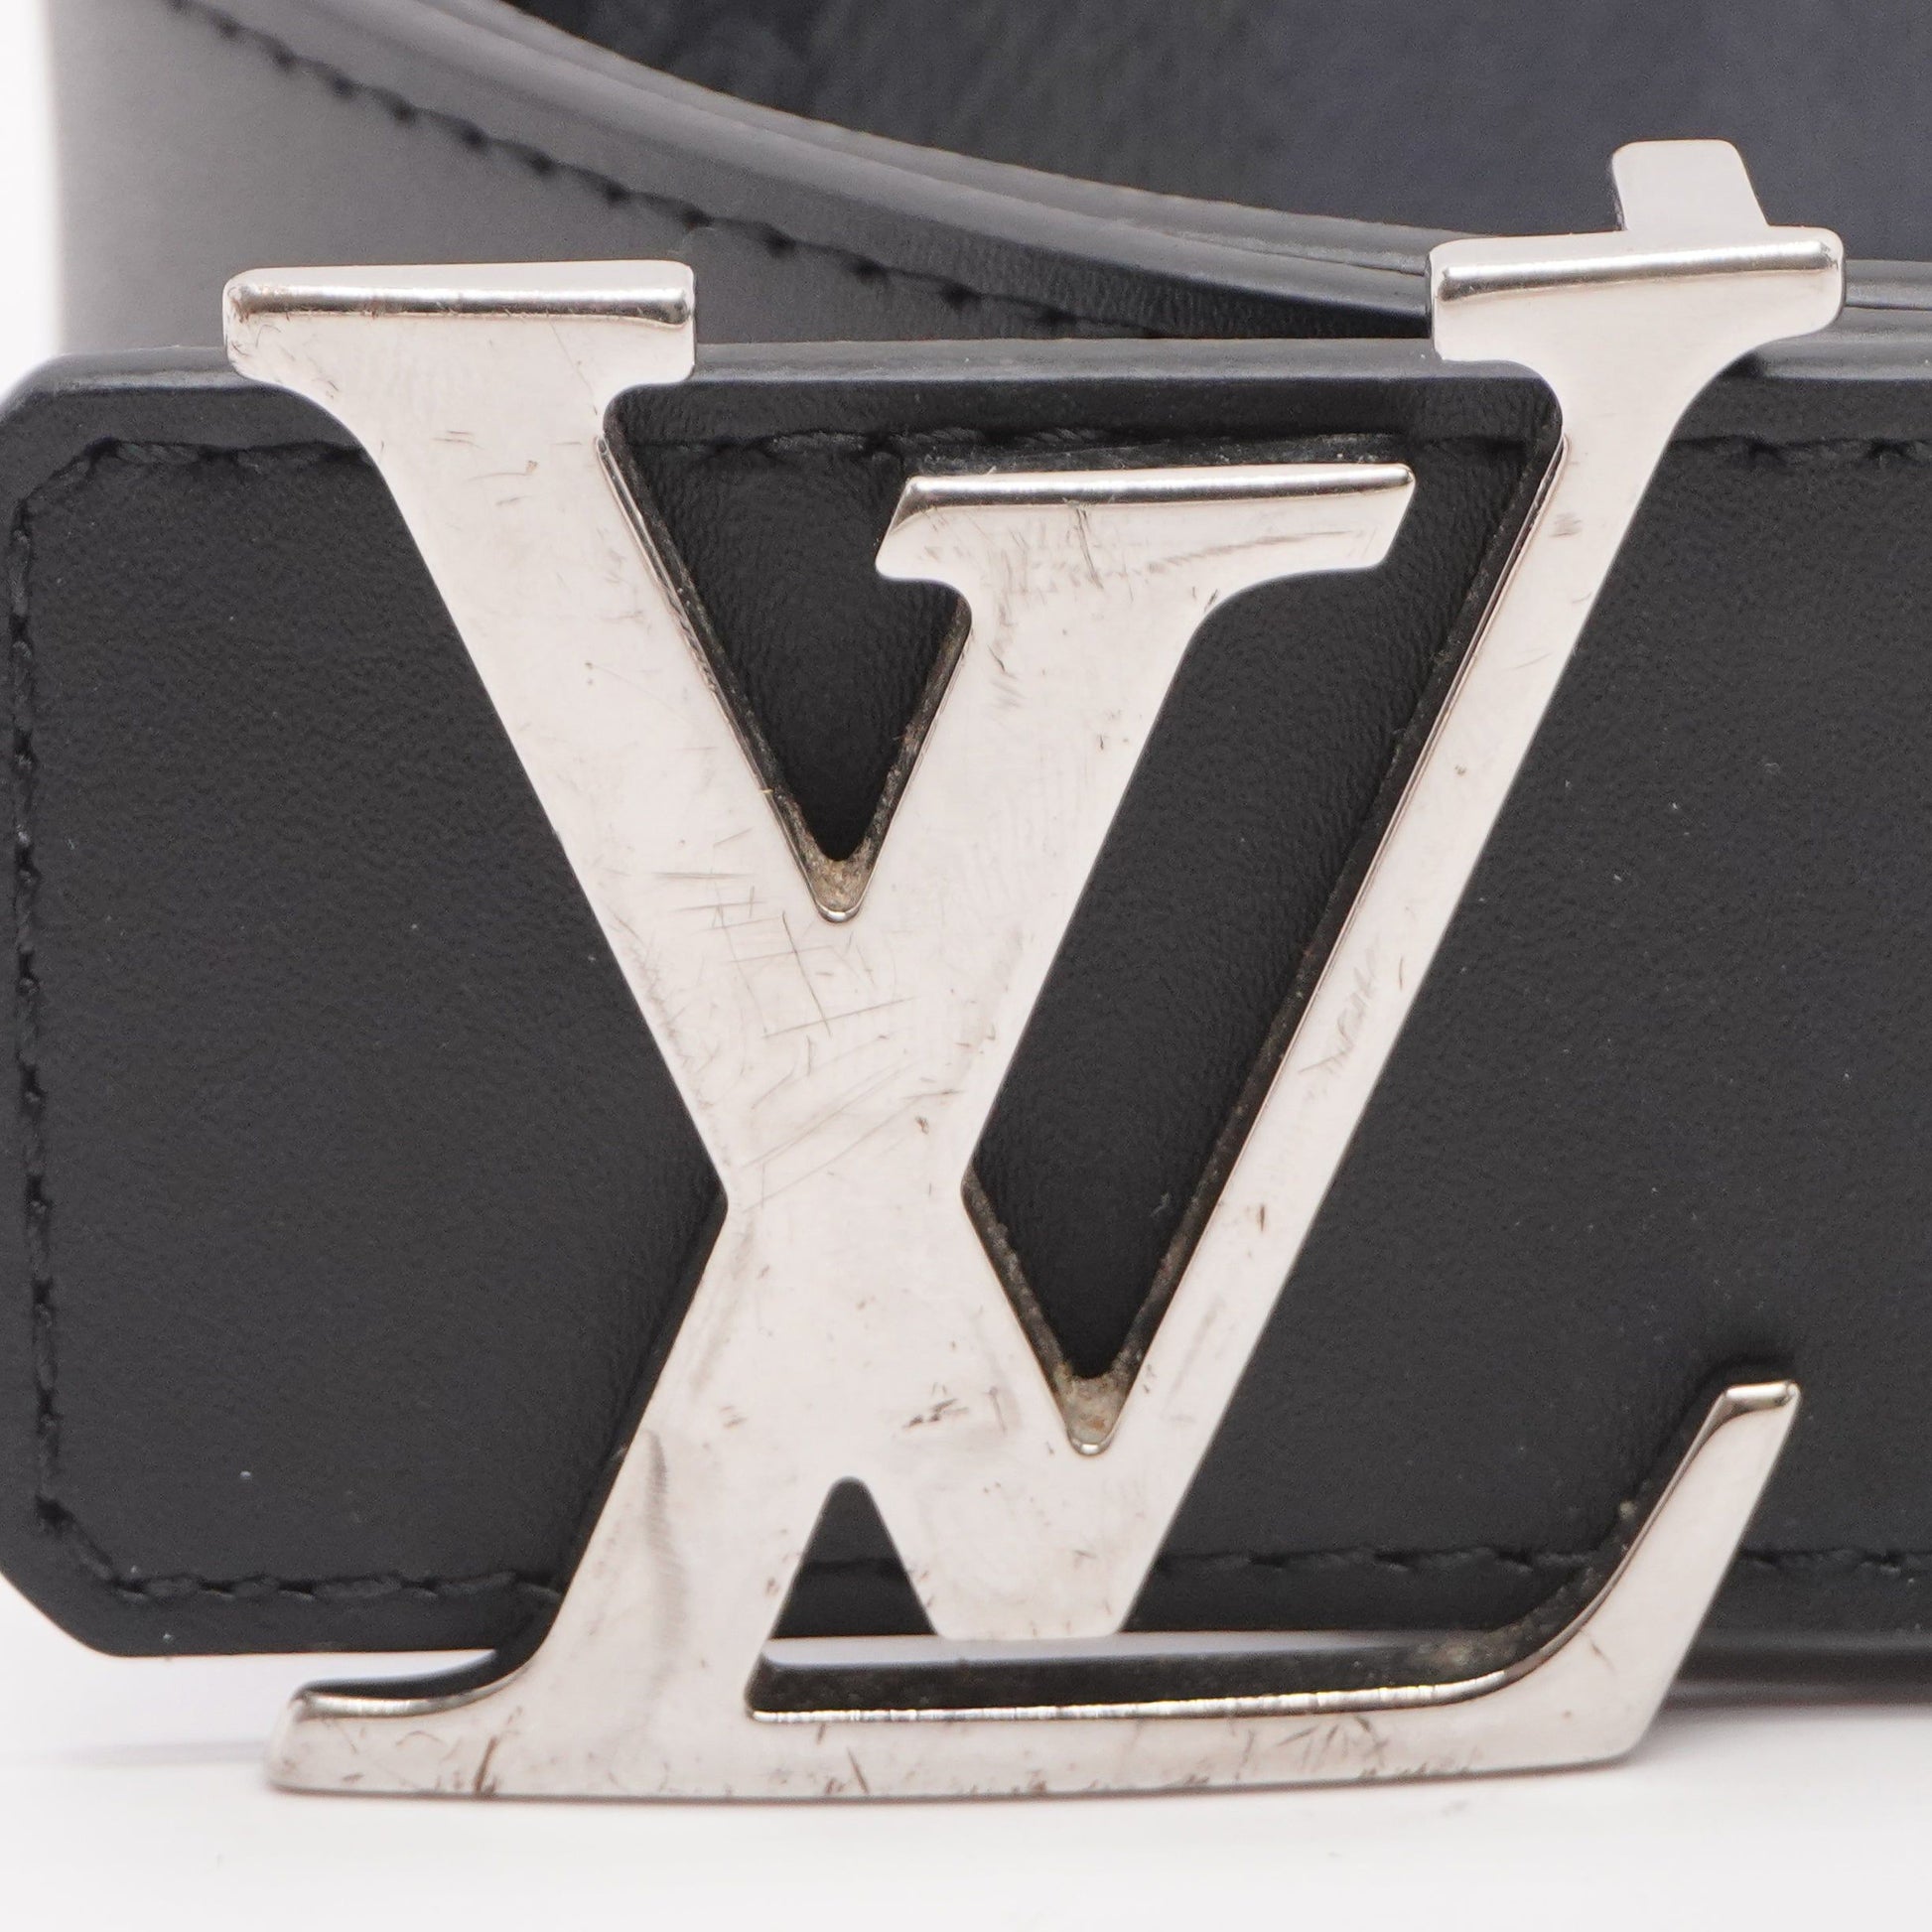 Mens Louis Vuitton Belt Black Damier LV Belt NEW for Sale in